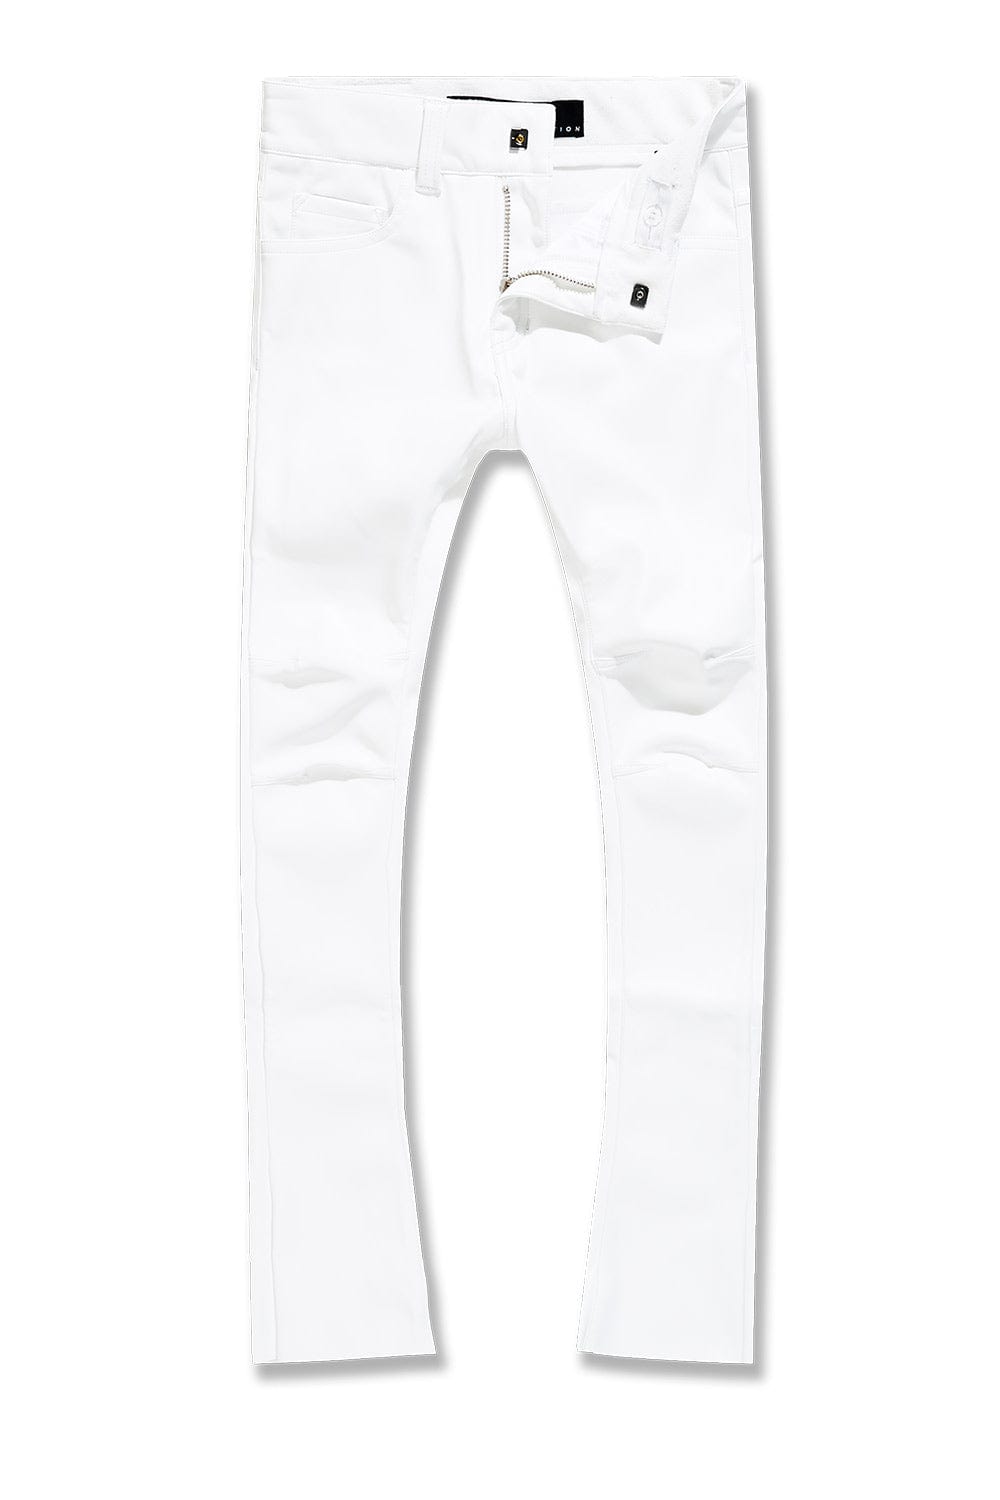 JC Kids Kids Stacked Thriller Pants (White) 2 / White